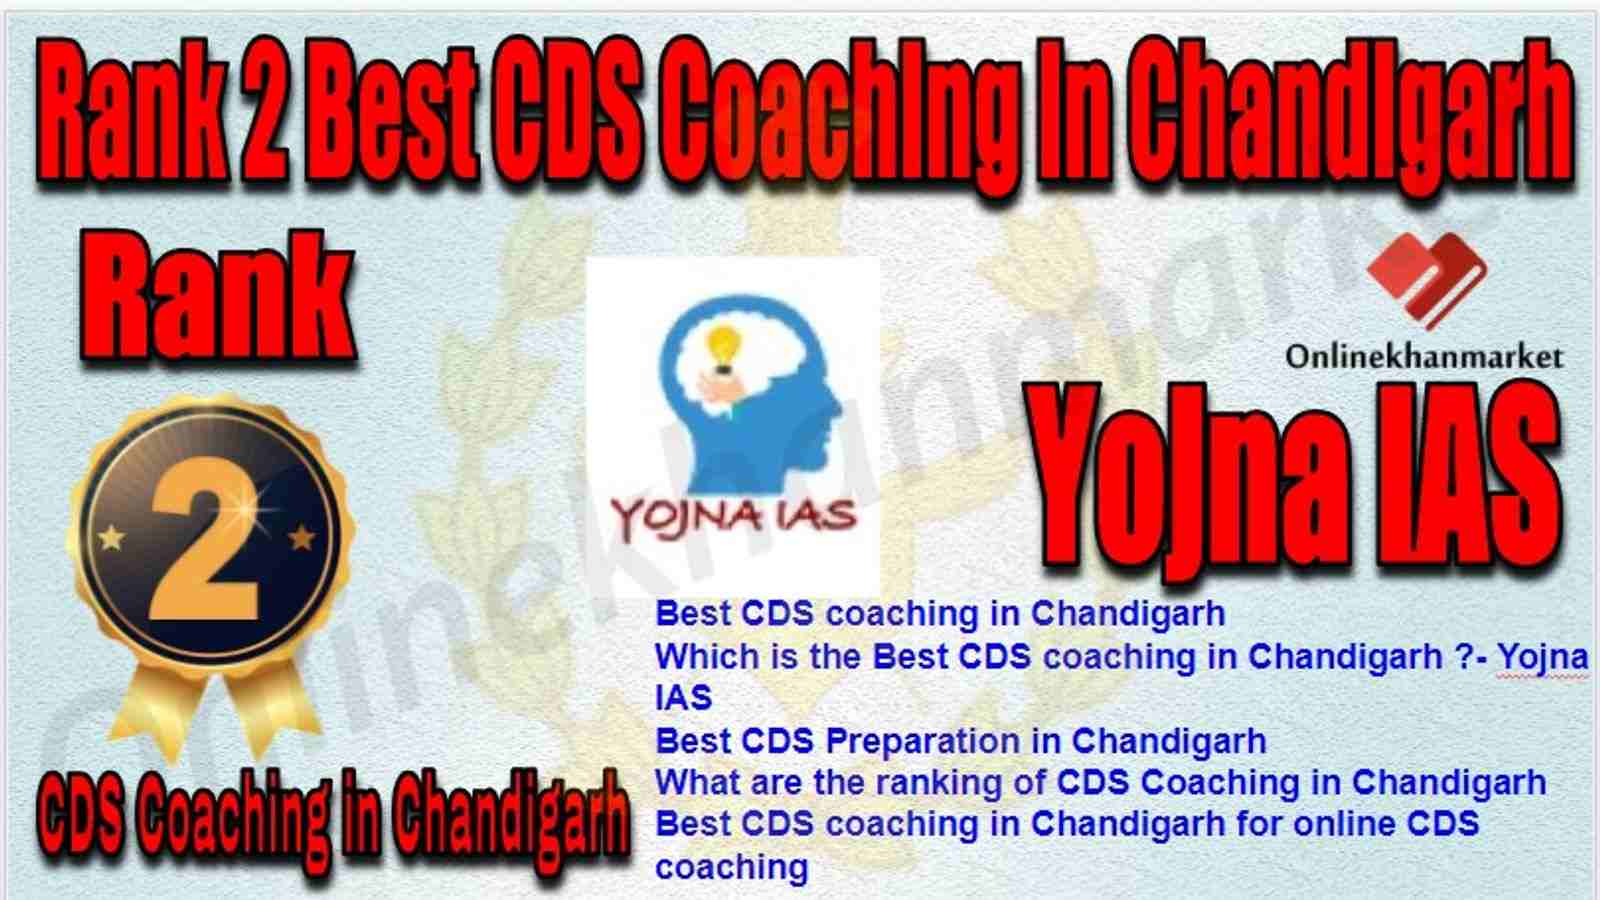 Rank 2 Best CDS Coaching in chandigarh